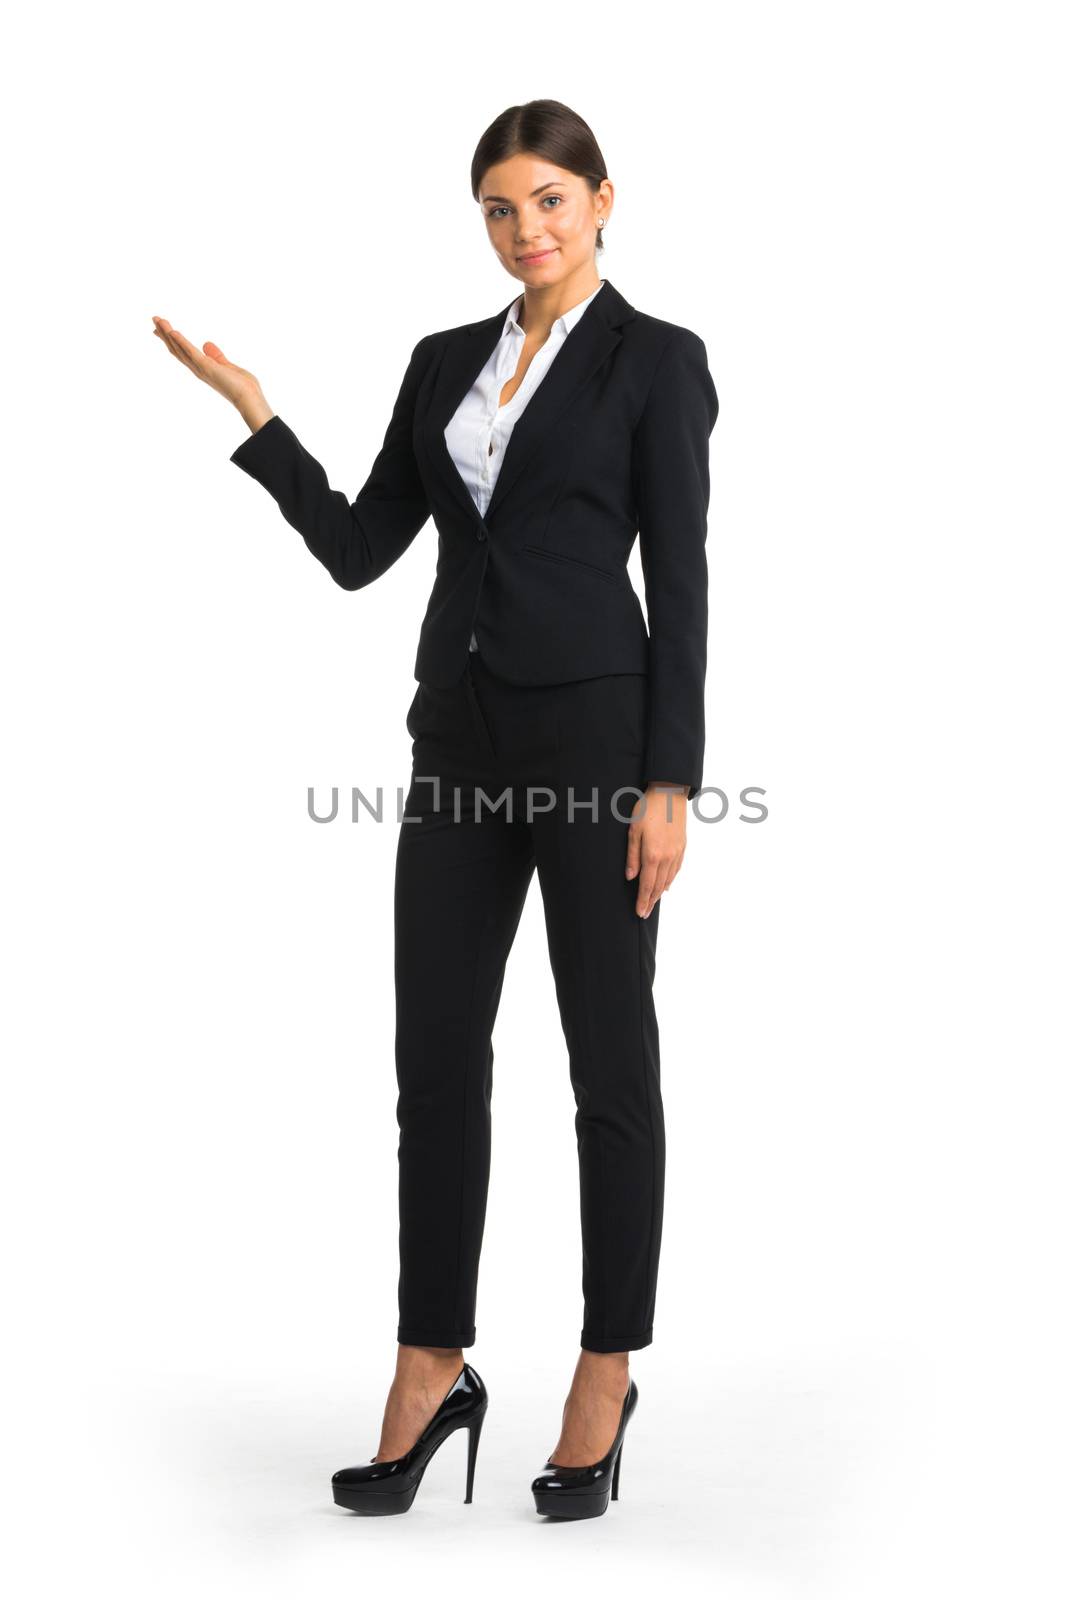 Business woman showing copyspace by Yellowj